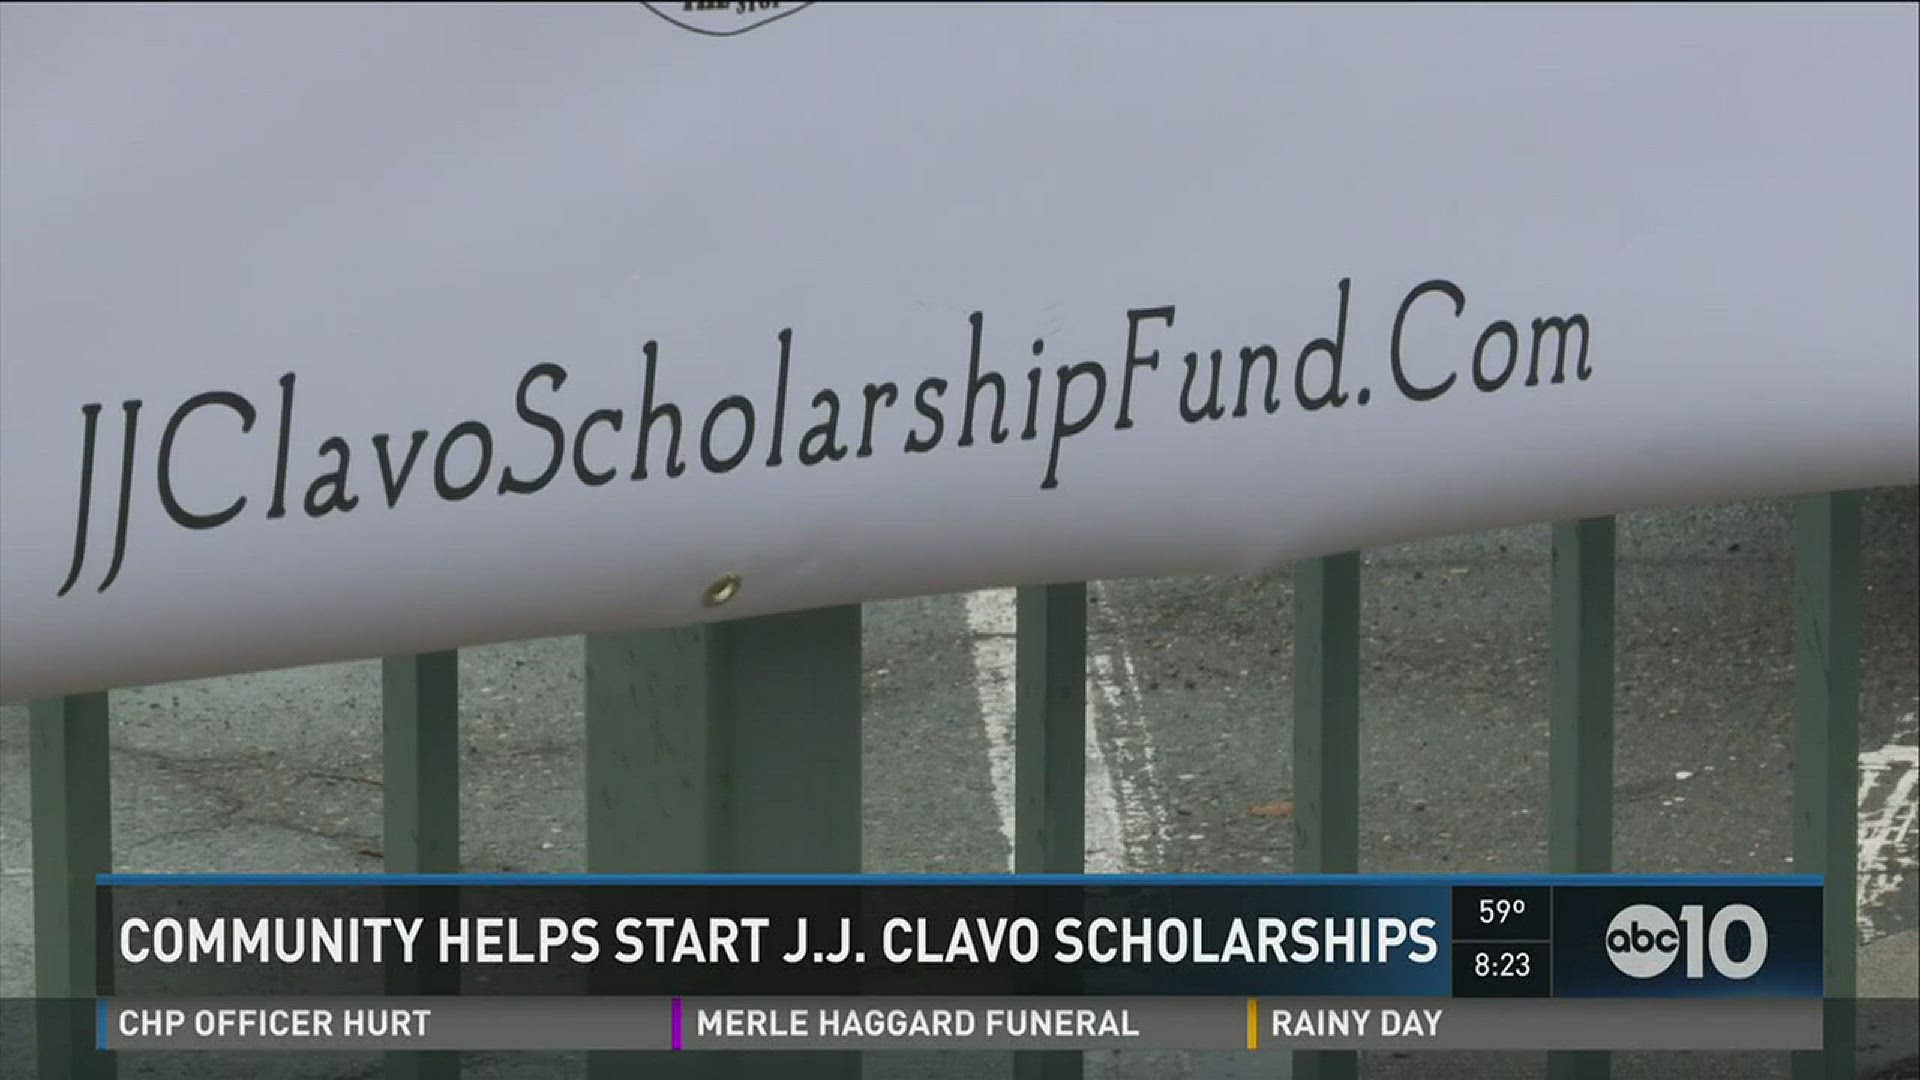 Community helps start J.J. Clavo scholarships (April 9, 2016)